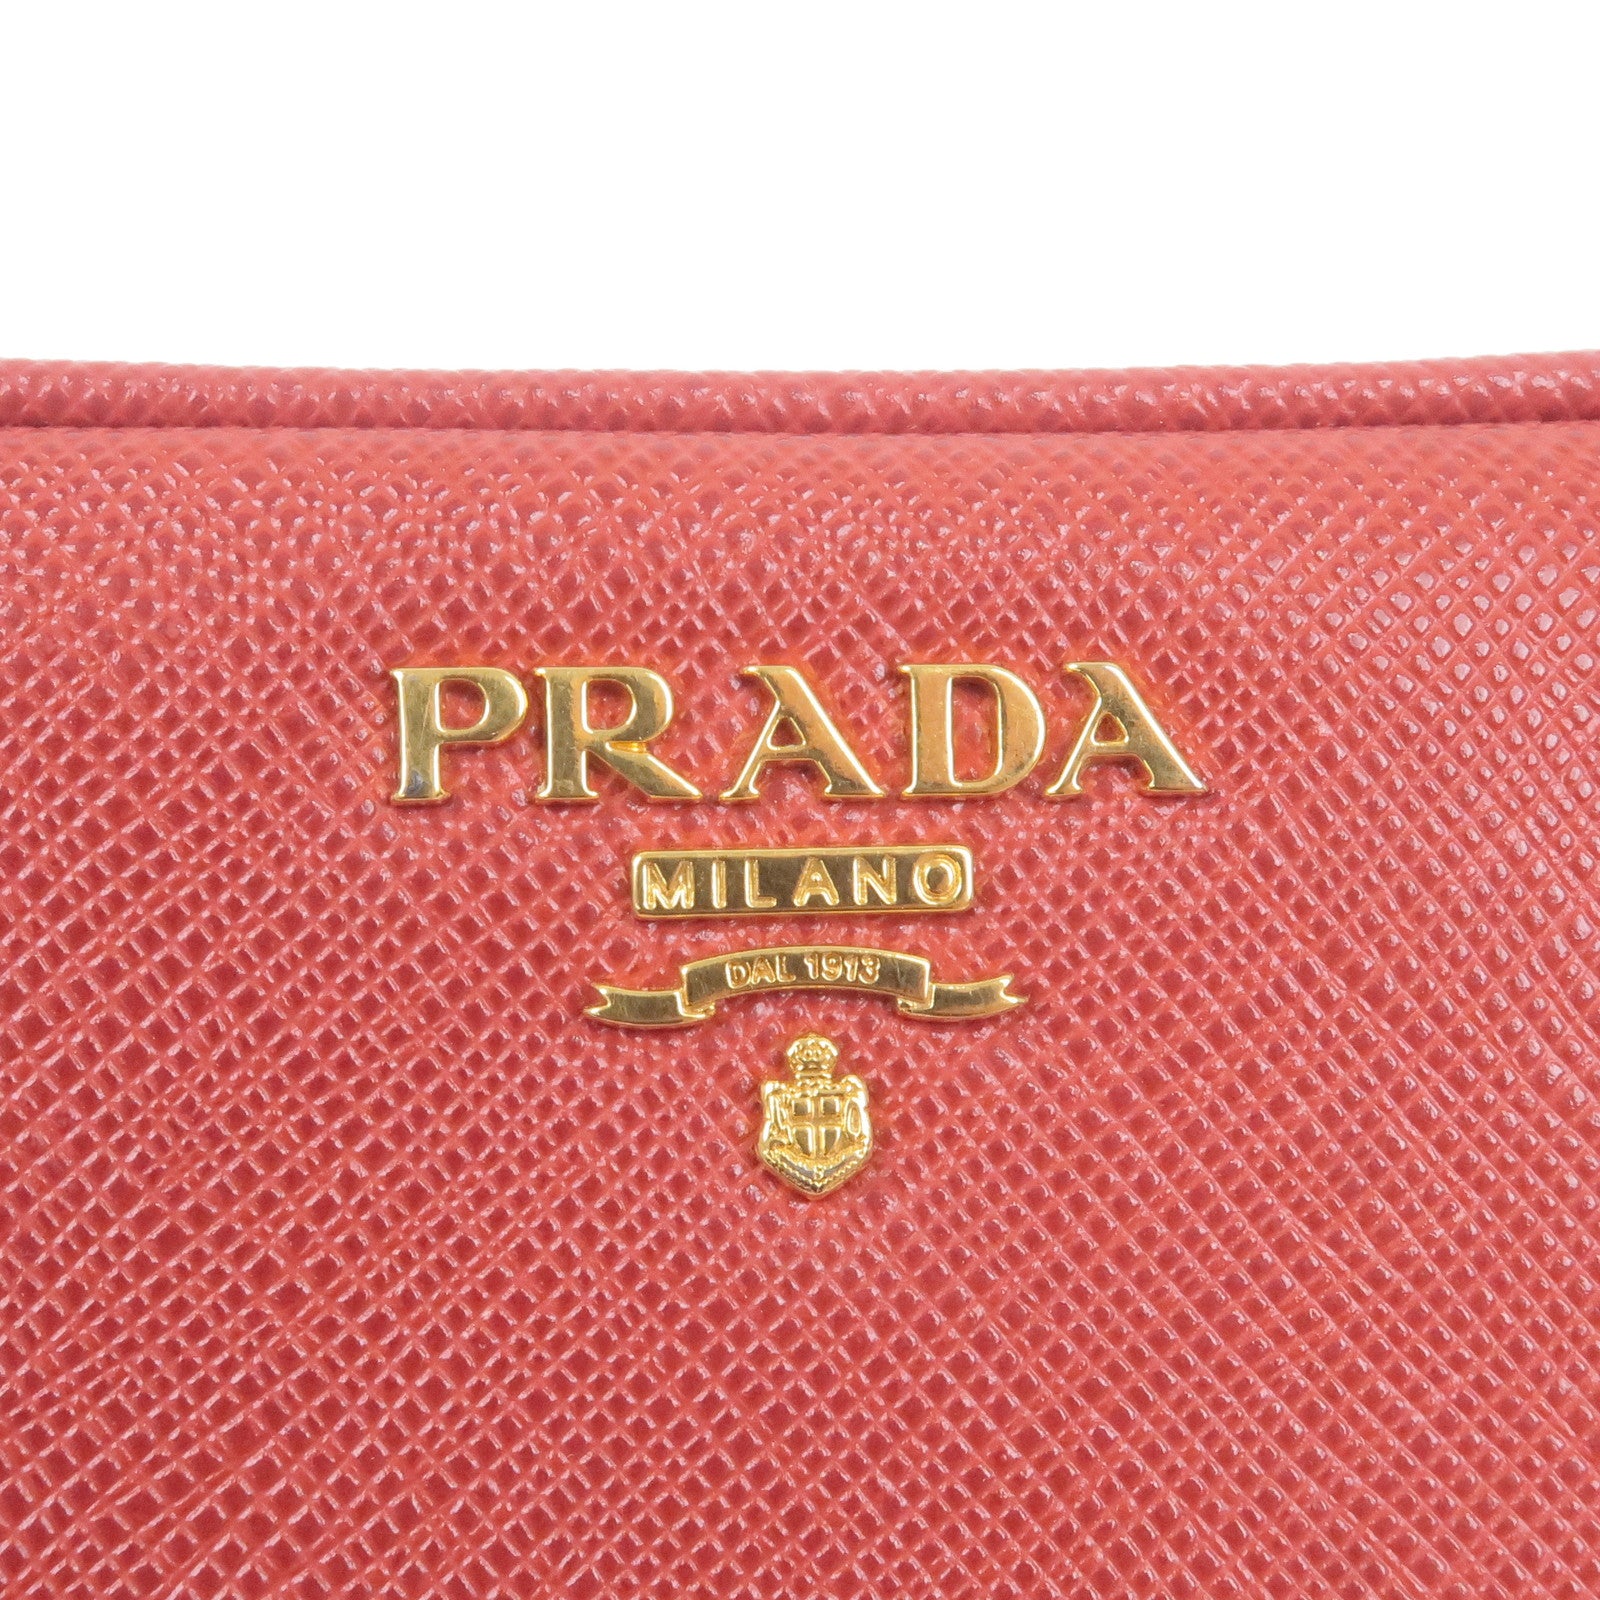 Femme leather bag in red - Prada | Mytheresa